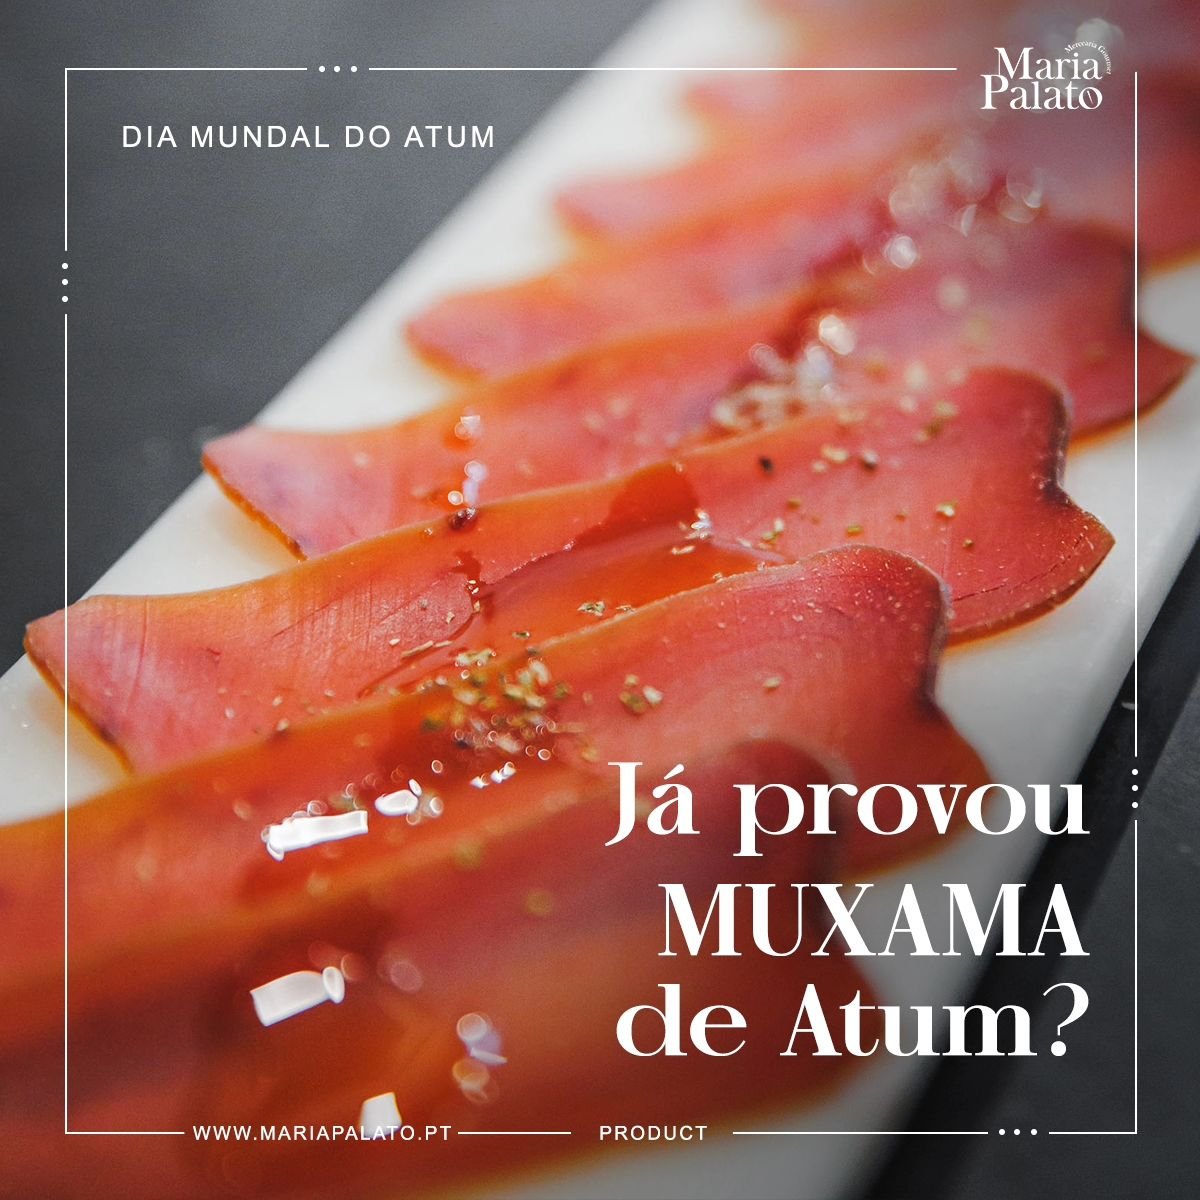 E porque hoje se comemora o dia mundial do Atum...
#atum #tuna #muxama #fish #dryfish #portuguese #portugal